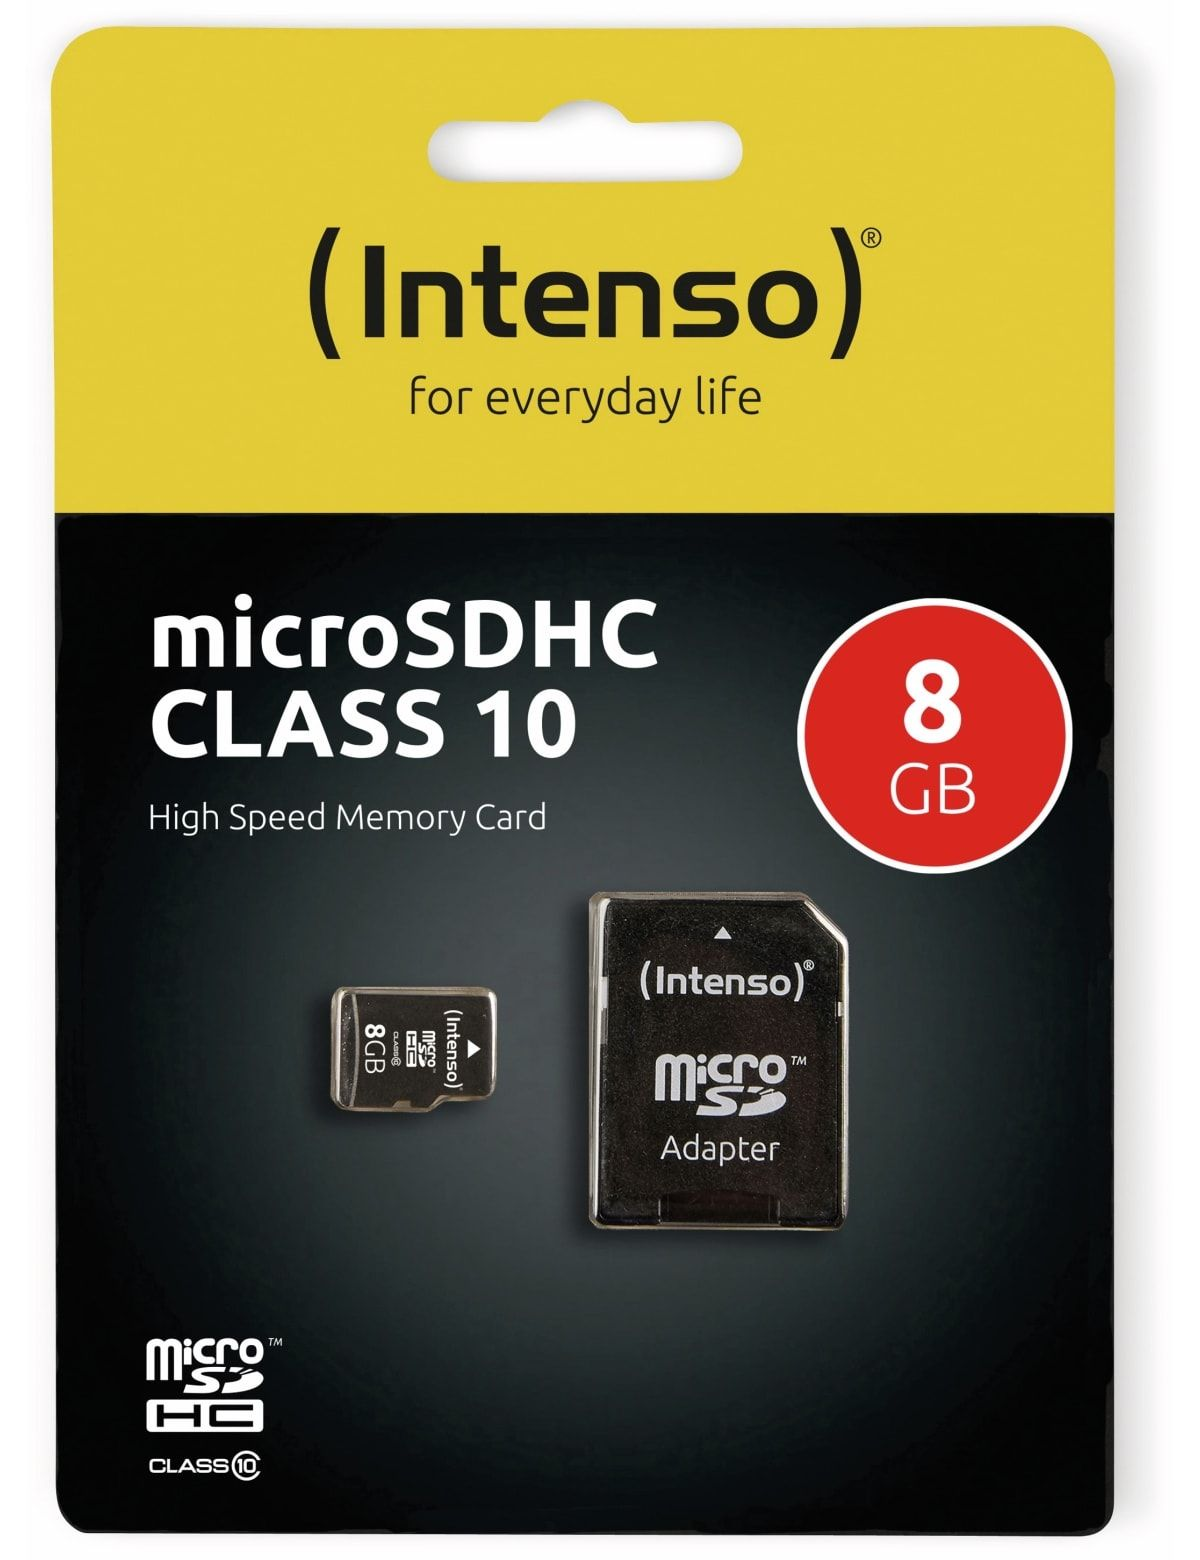 10 MicroSD GB, 8GB Speicherkarte, MB/s 12 8 INTENSO Class Micro-SD Card SDHC,